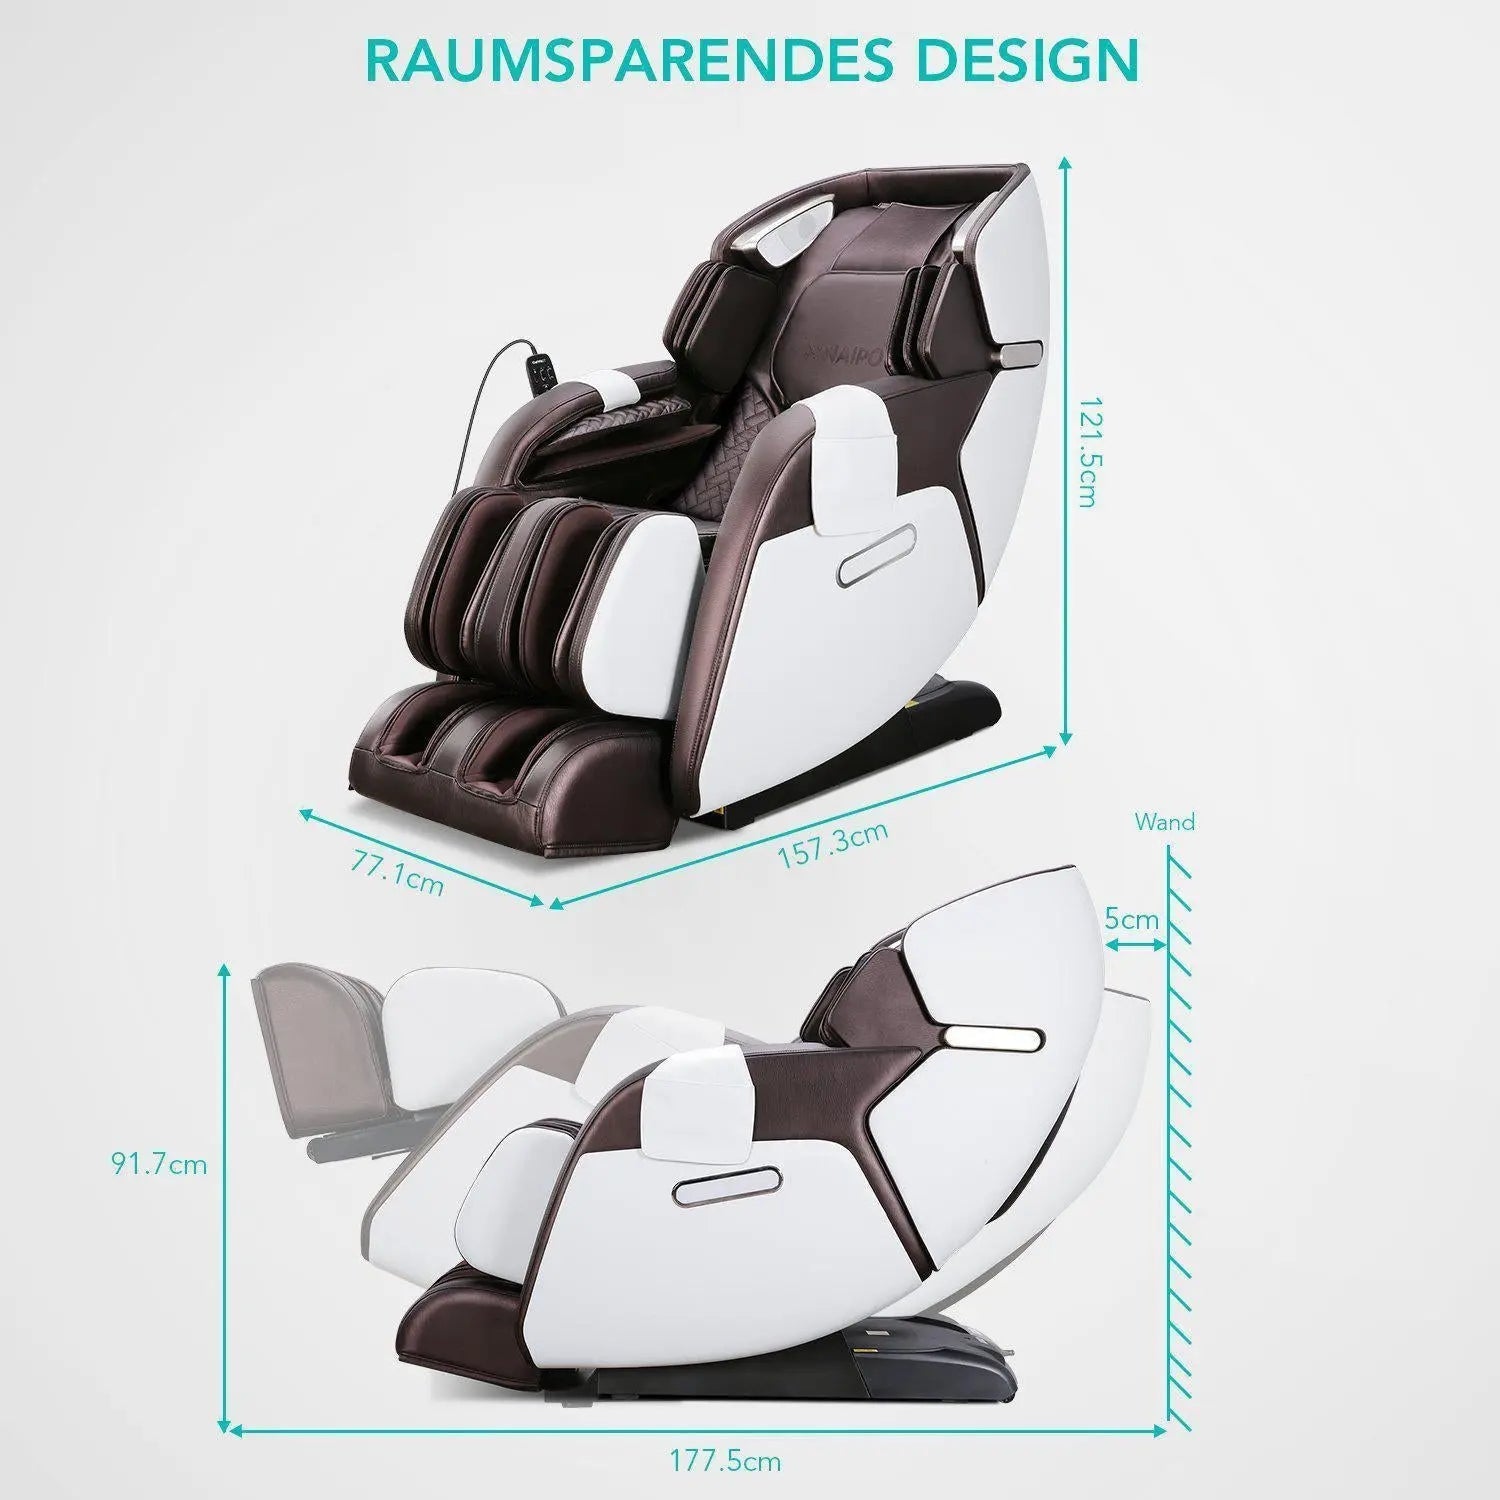 NAIPO Premium 4D Massage Chair Heat Function, Shiatsu, Zero Gravity, Bluetooth Surround Sound, Marron/Blanc